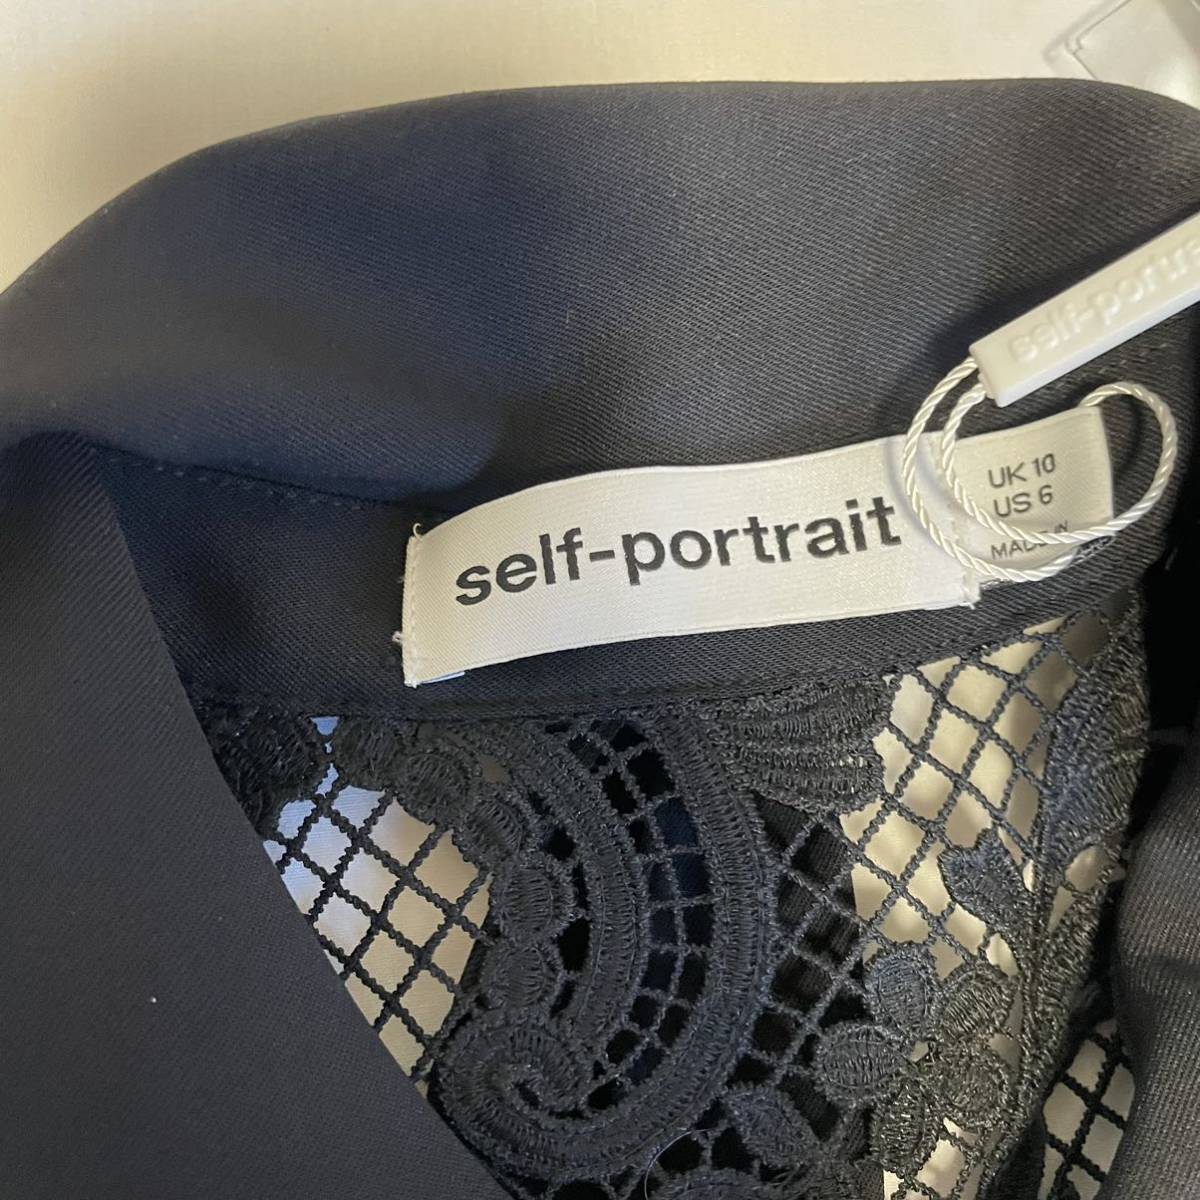 self-portrait lady's total lace bra light black black short sleeves shirt tops self portrait unused tag attaching back ribbon 